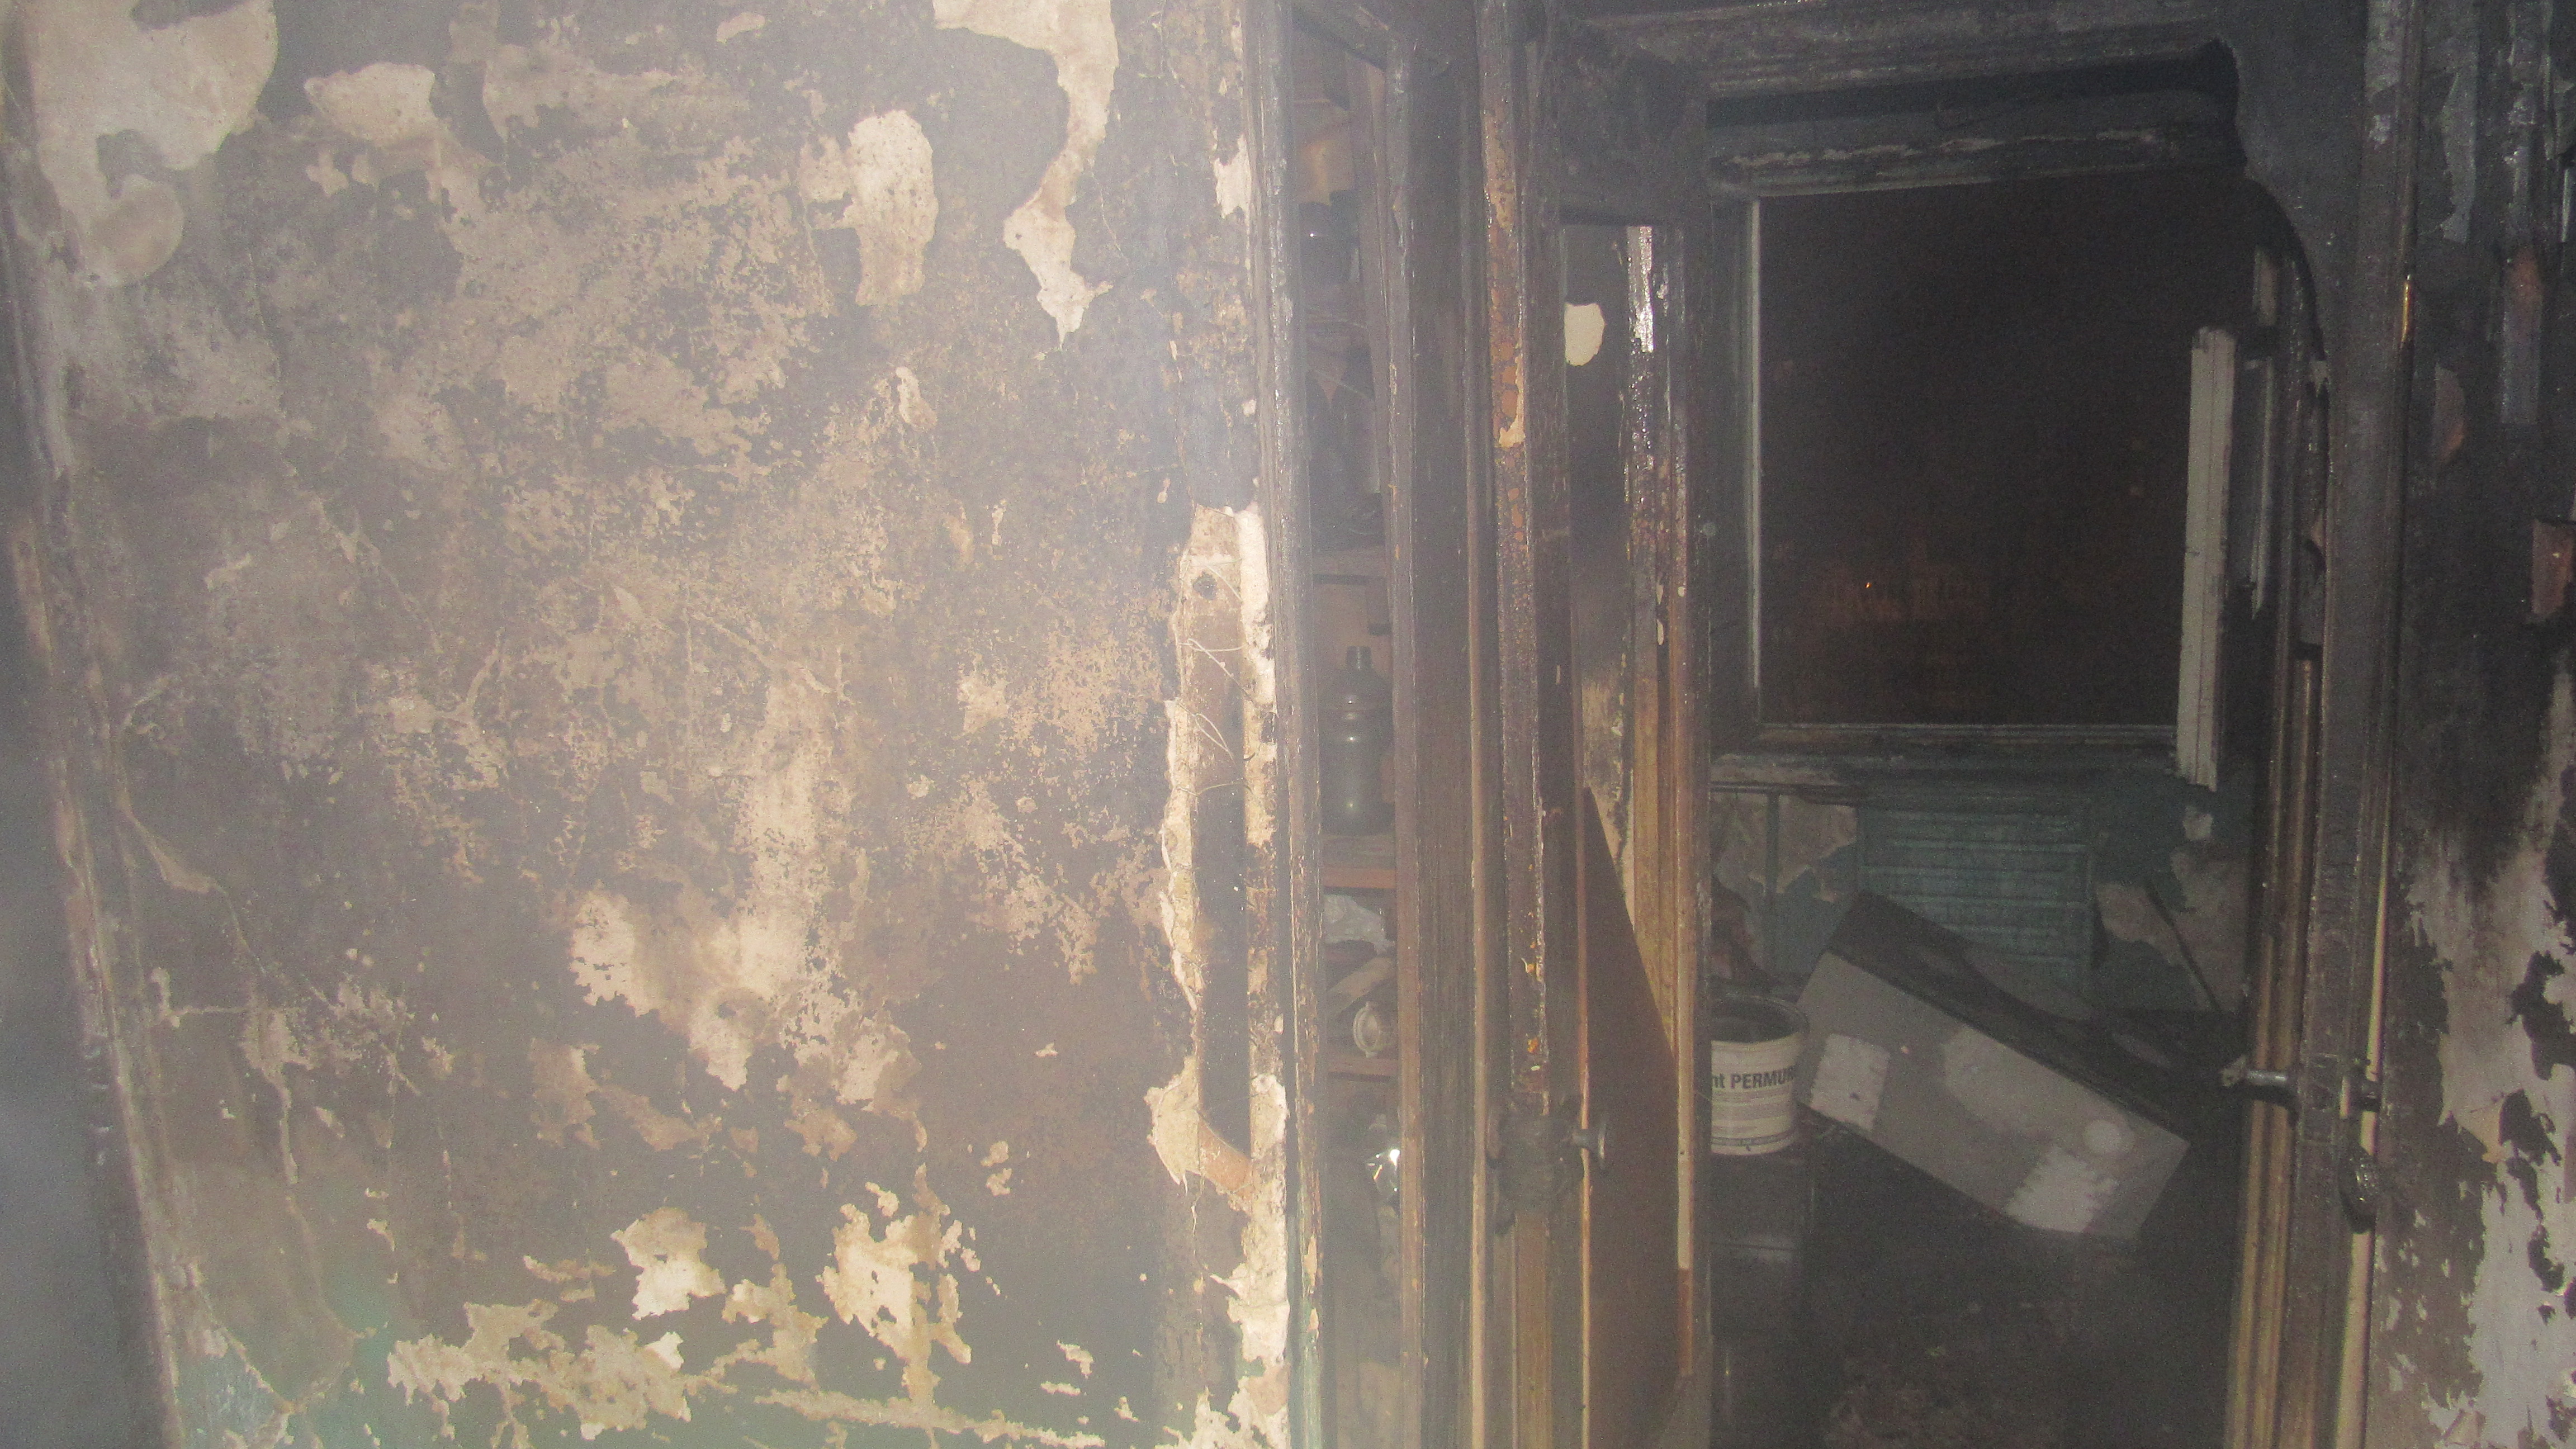 В Запорожье из-за пожара едва не погибли люди, среди них был ребенок (ФОТО)